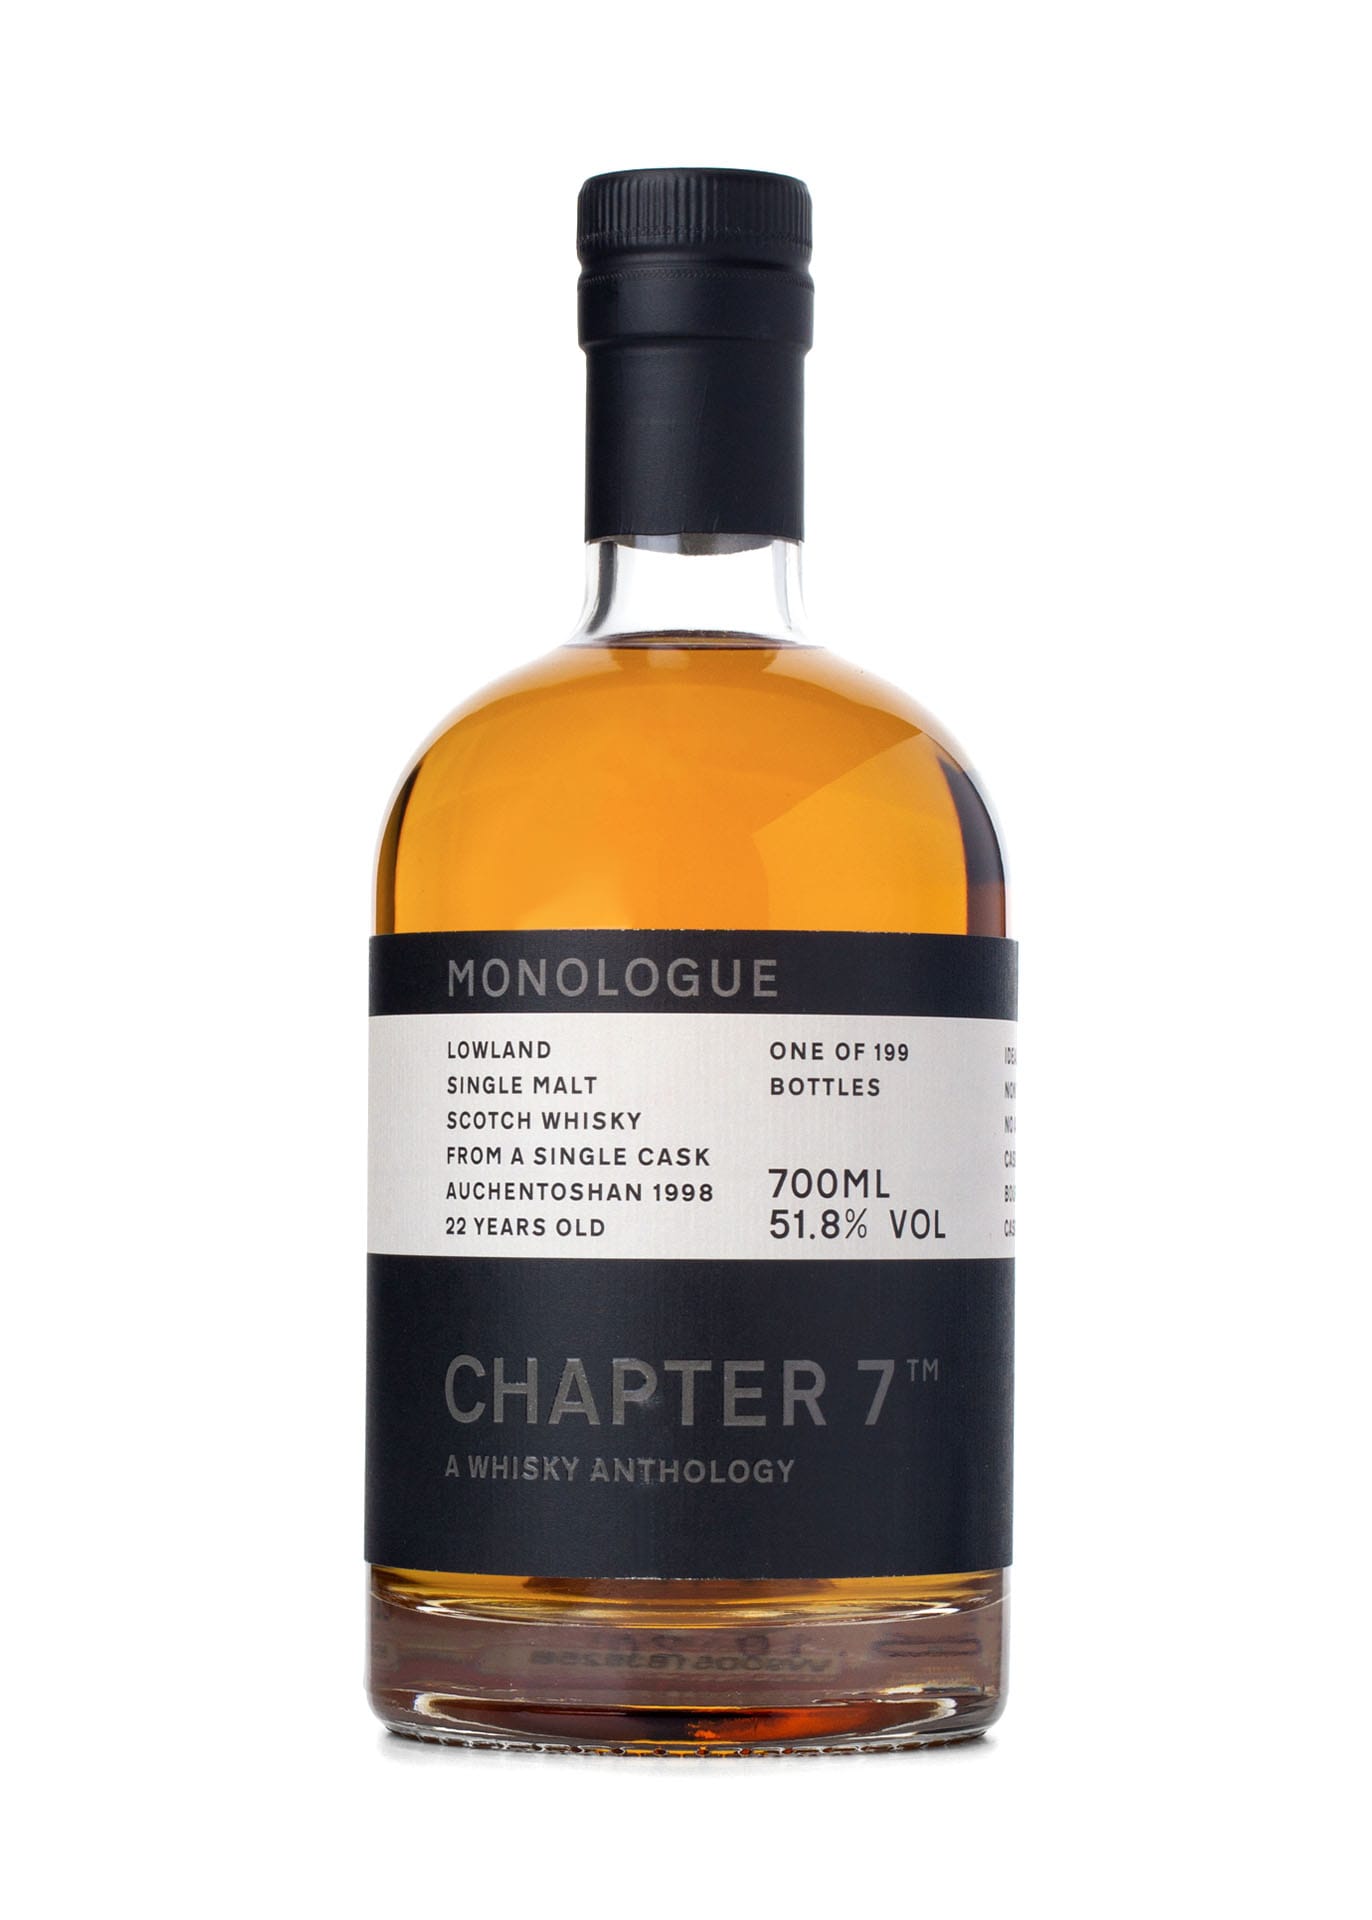 Chapter 7 Auchentoshan Single Malt Scotch Whisky Bottle Front